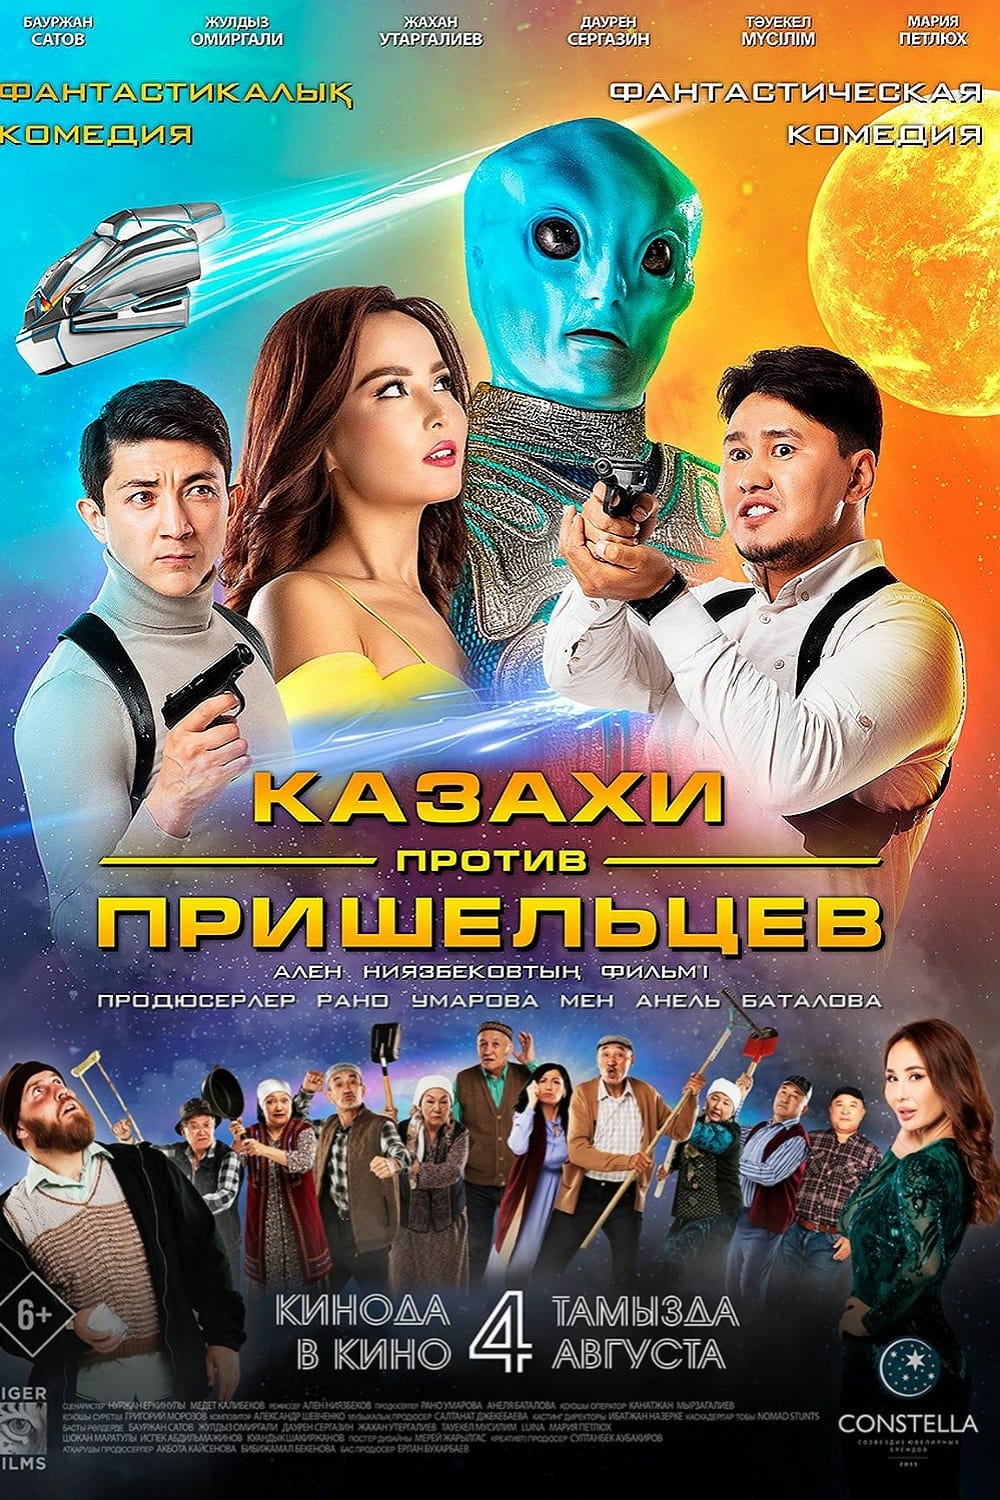 Kazakhs vs Aliens